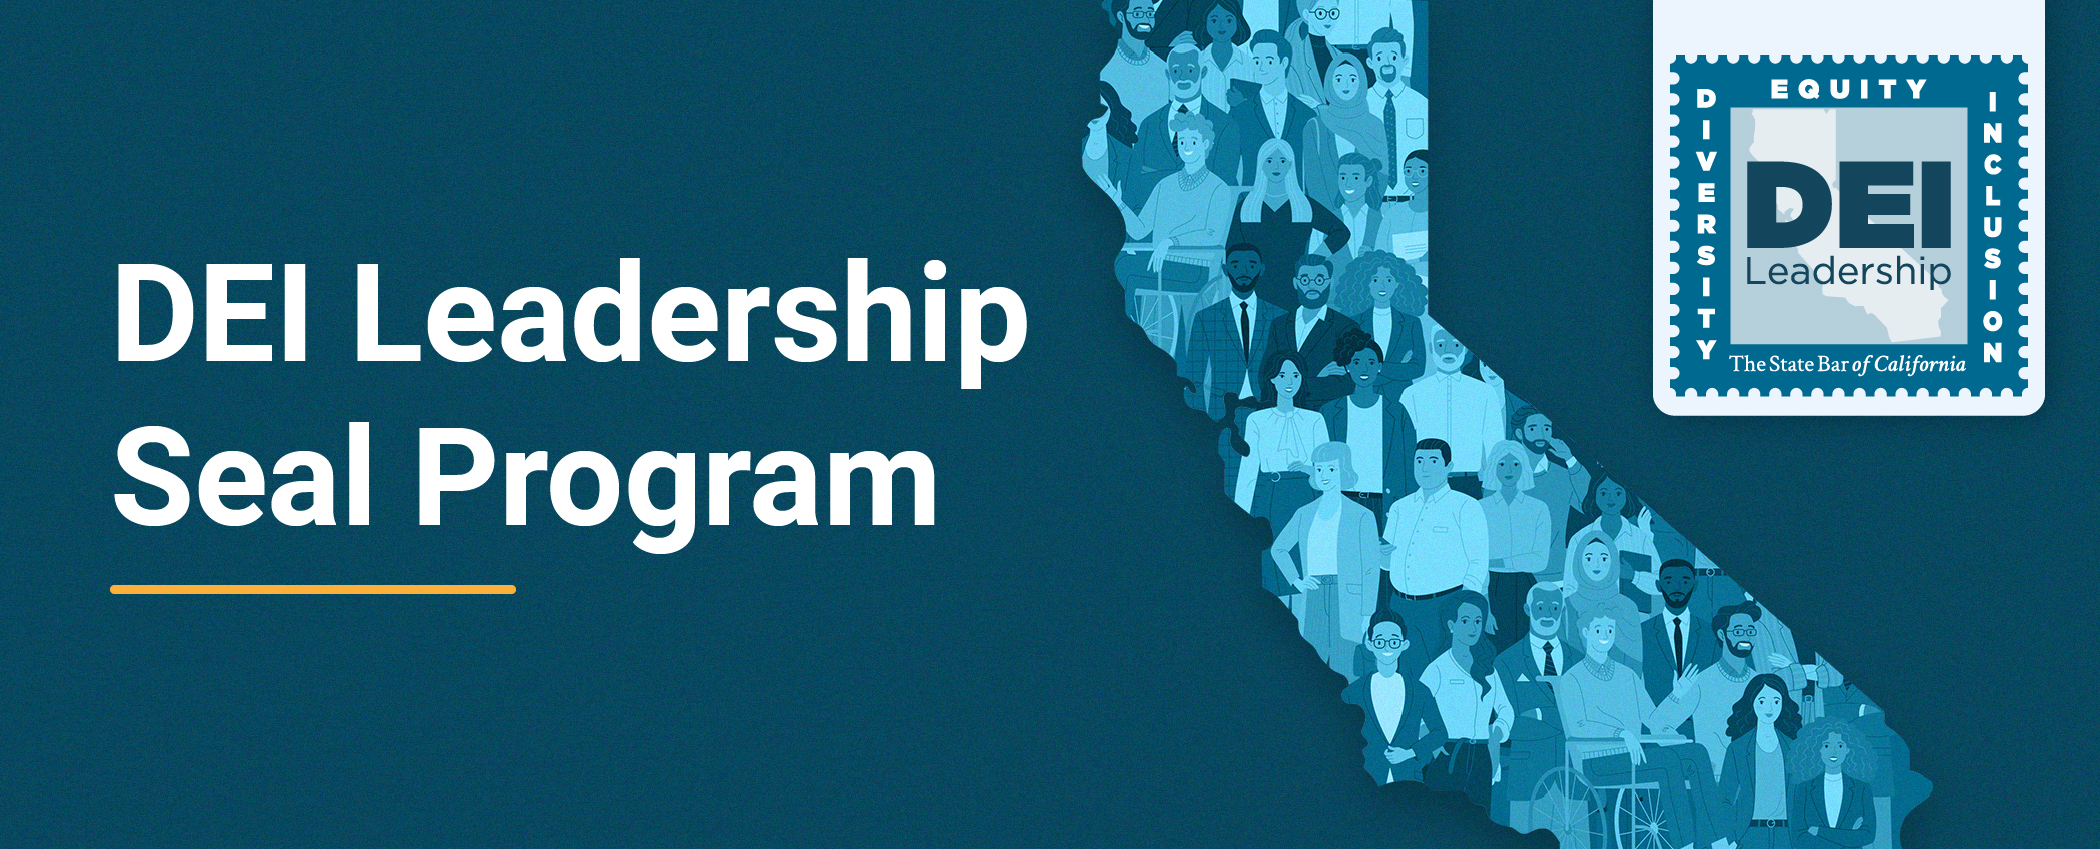 DEI Leadership Seal Program banner